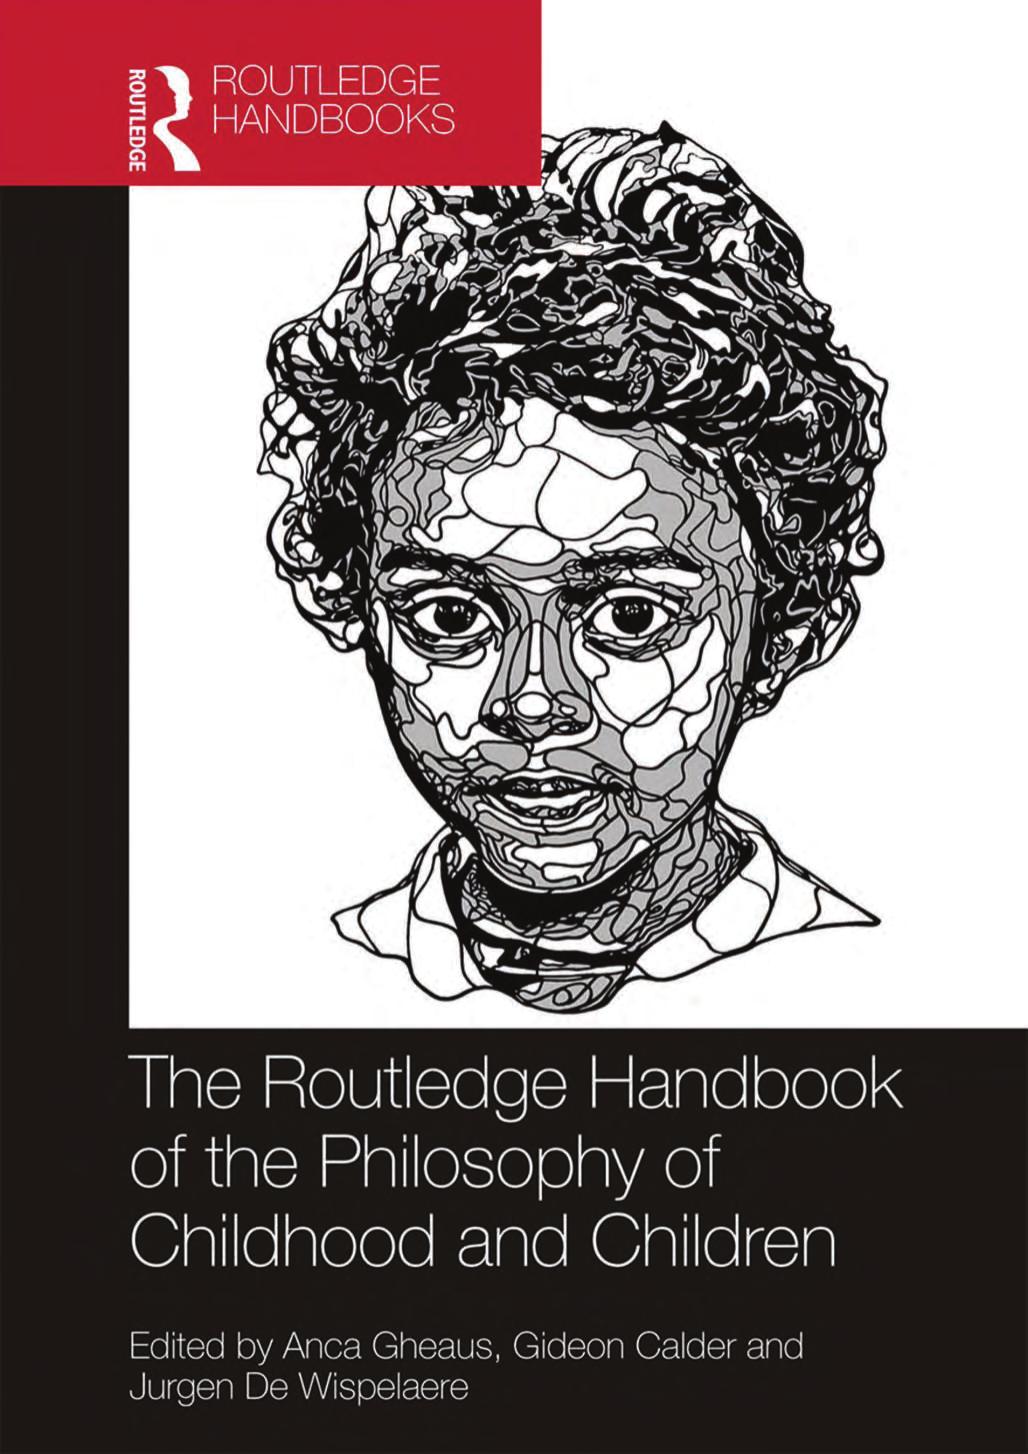 The Routledge Handbook of the Philosophy of Childhood and Children by Anca Gheaus Gideon Calder Jurgen De Wispelaere